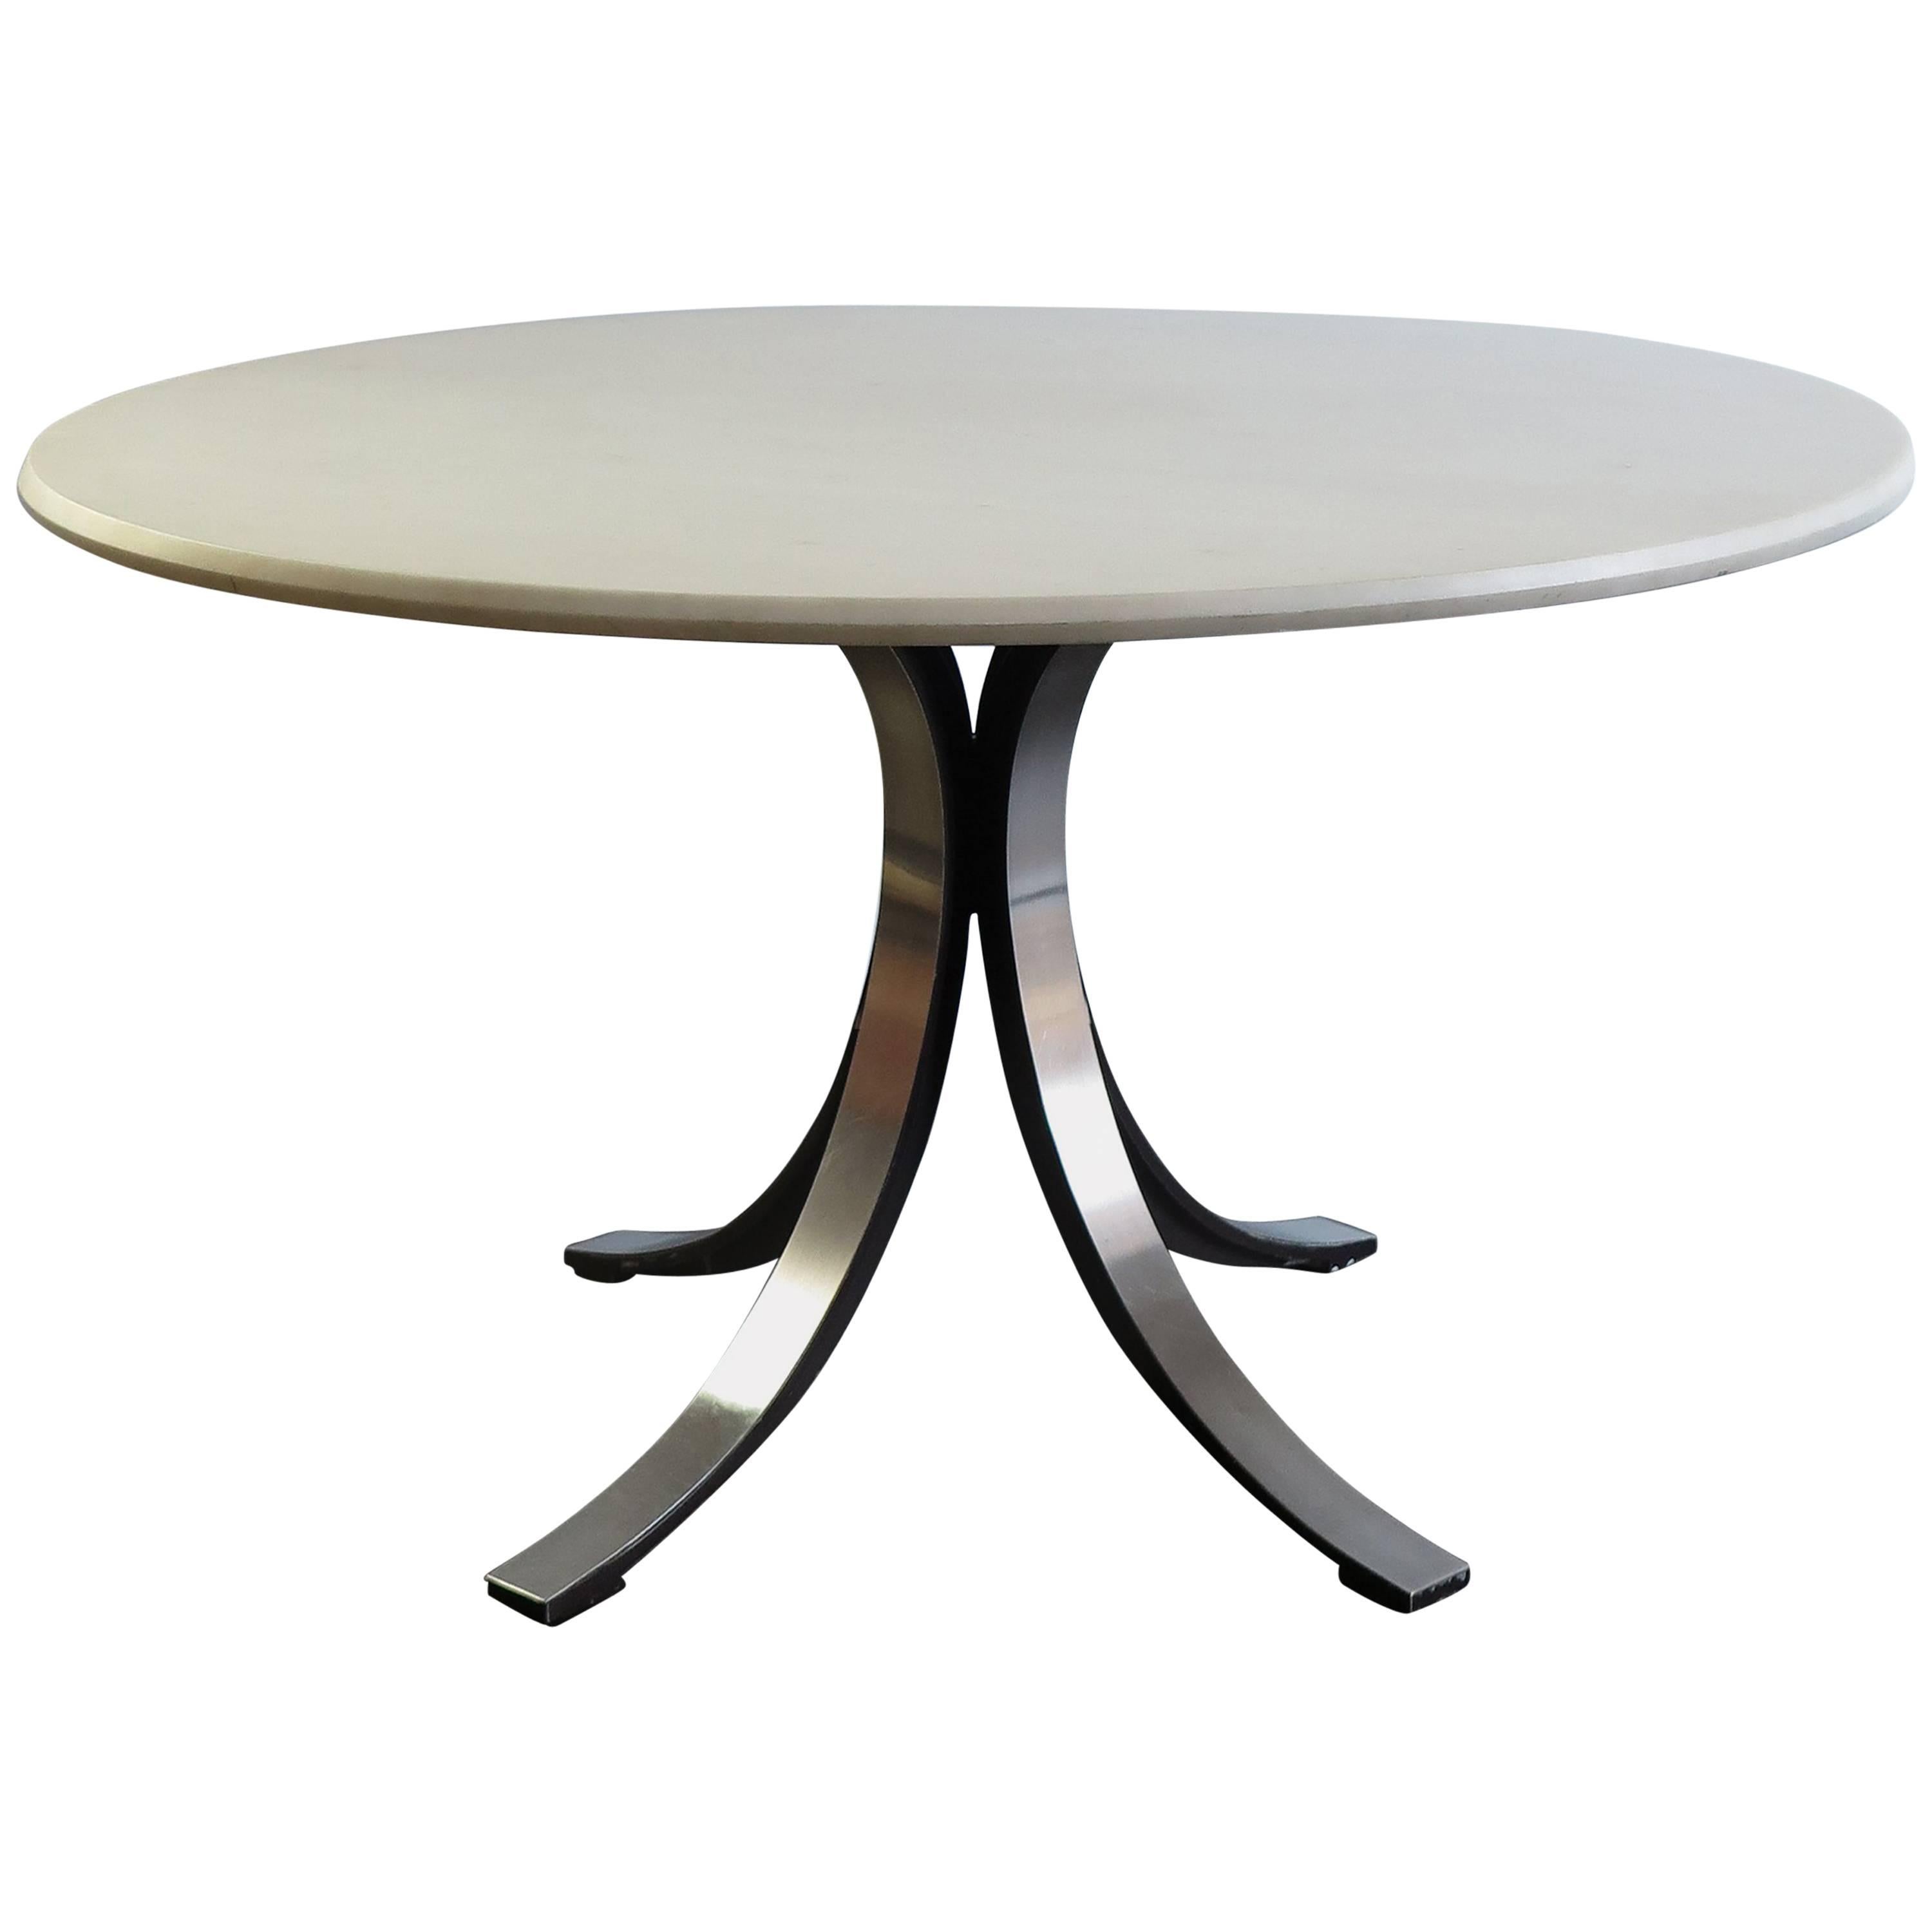 1960s Borsani and Gerli Italian Carrara Marble Dining Table "T69" for Tecno